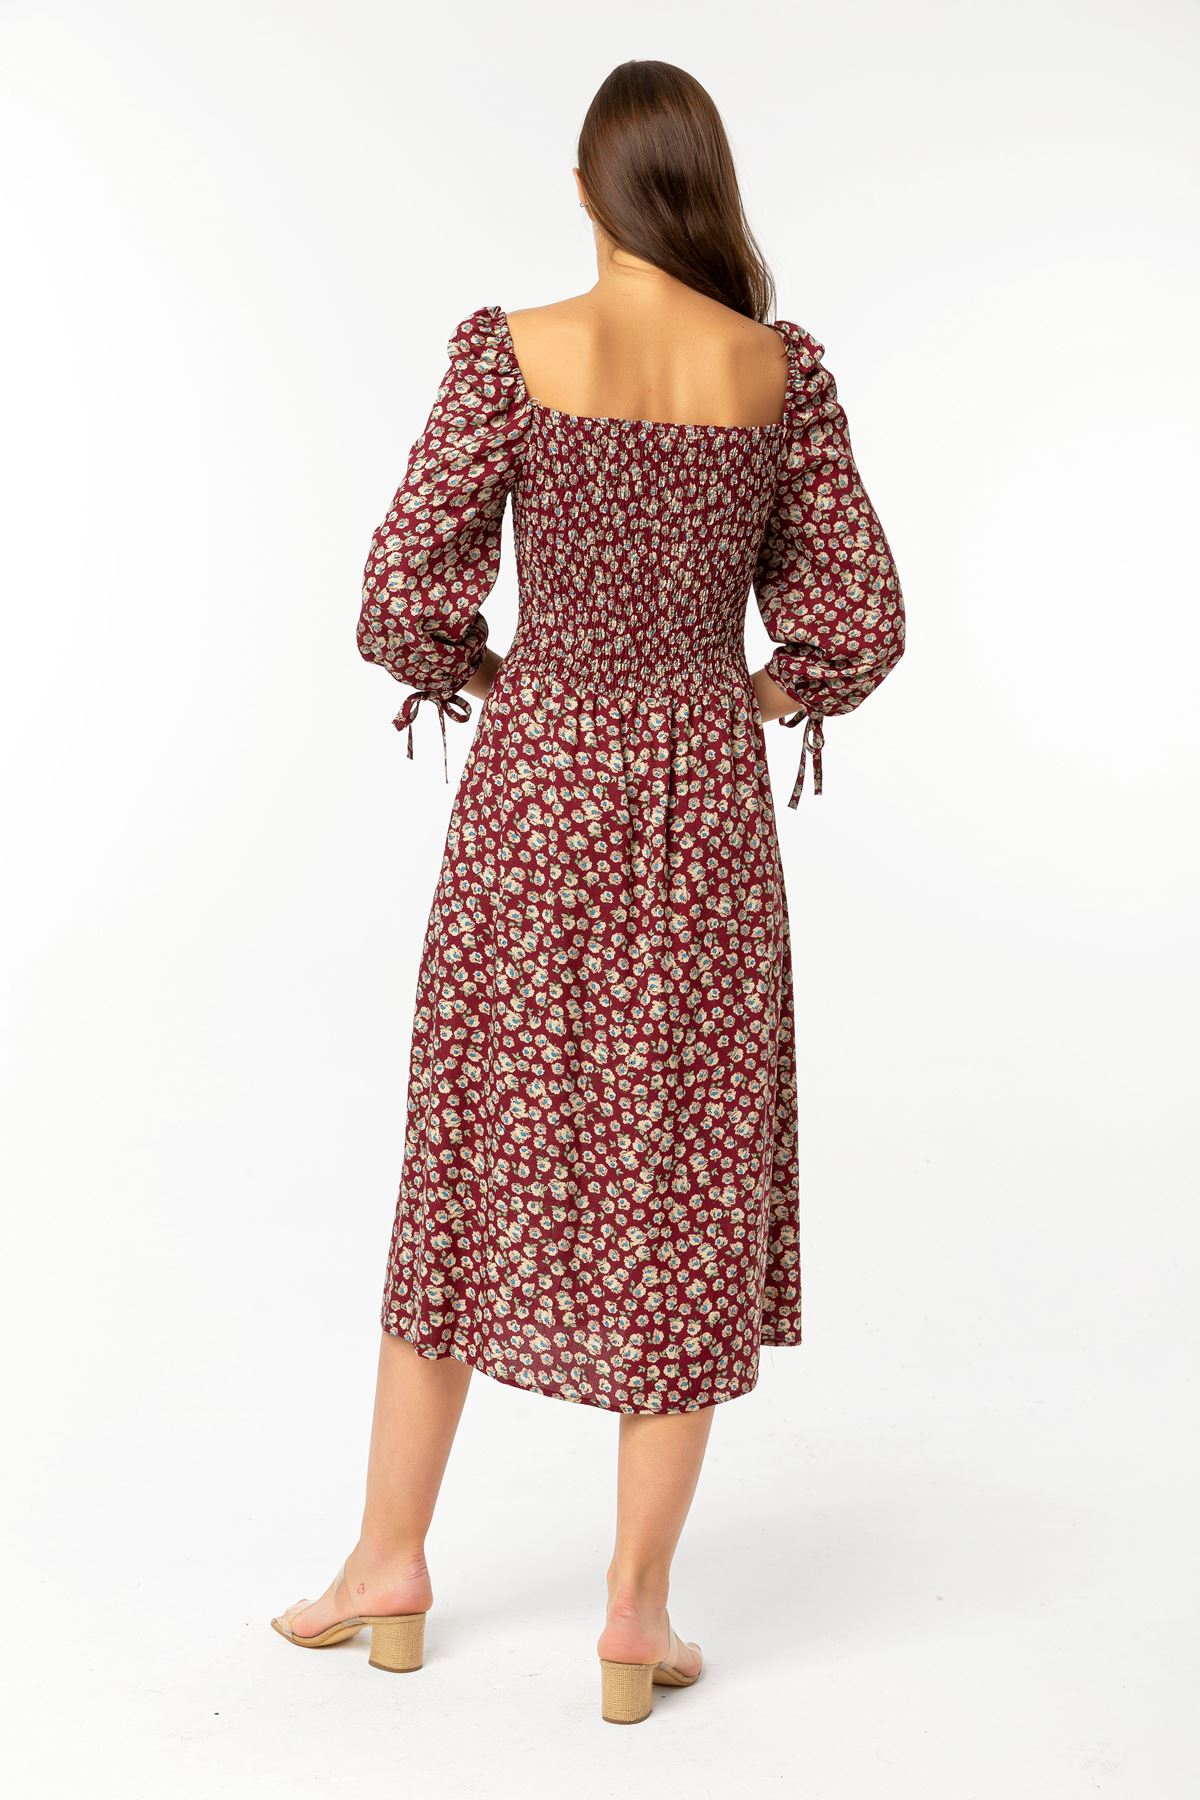 فستان نسائي قماش استيعاب نصف ذراع طوق مربع تحت الركبتين ضيق نمط زهرة - Burgundy